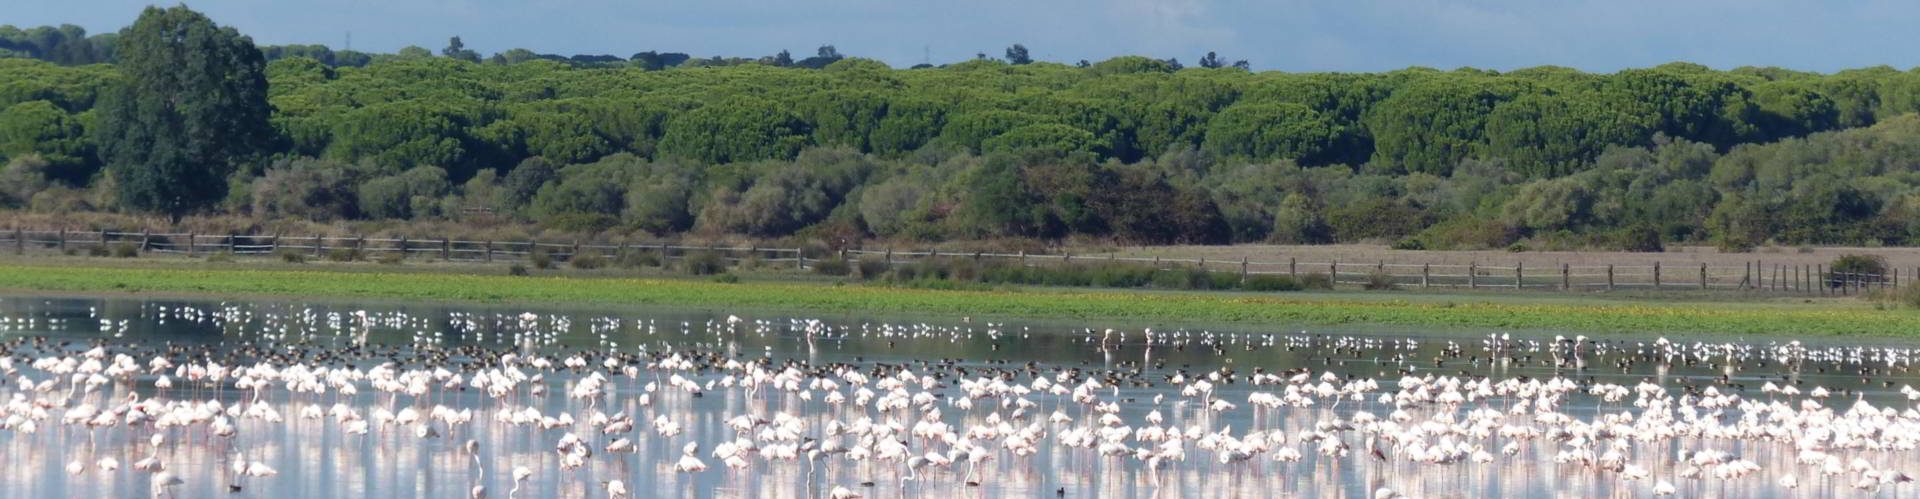 flamingo flock at La Dehesa de Abajo, Andalucia